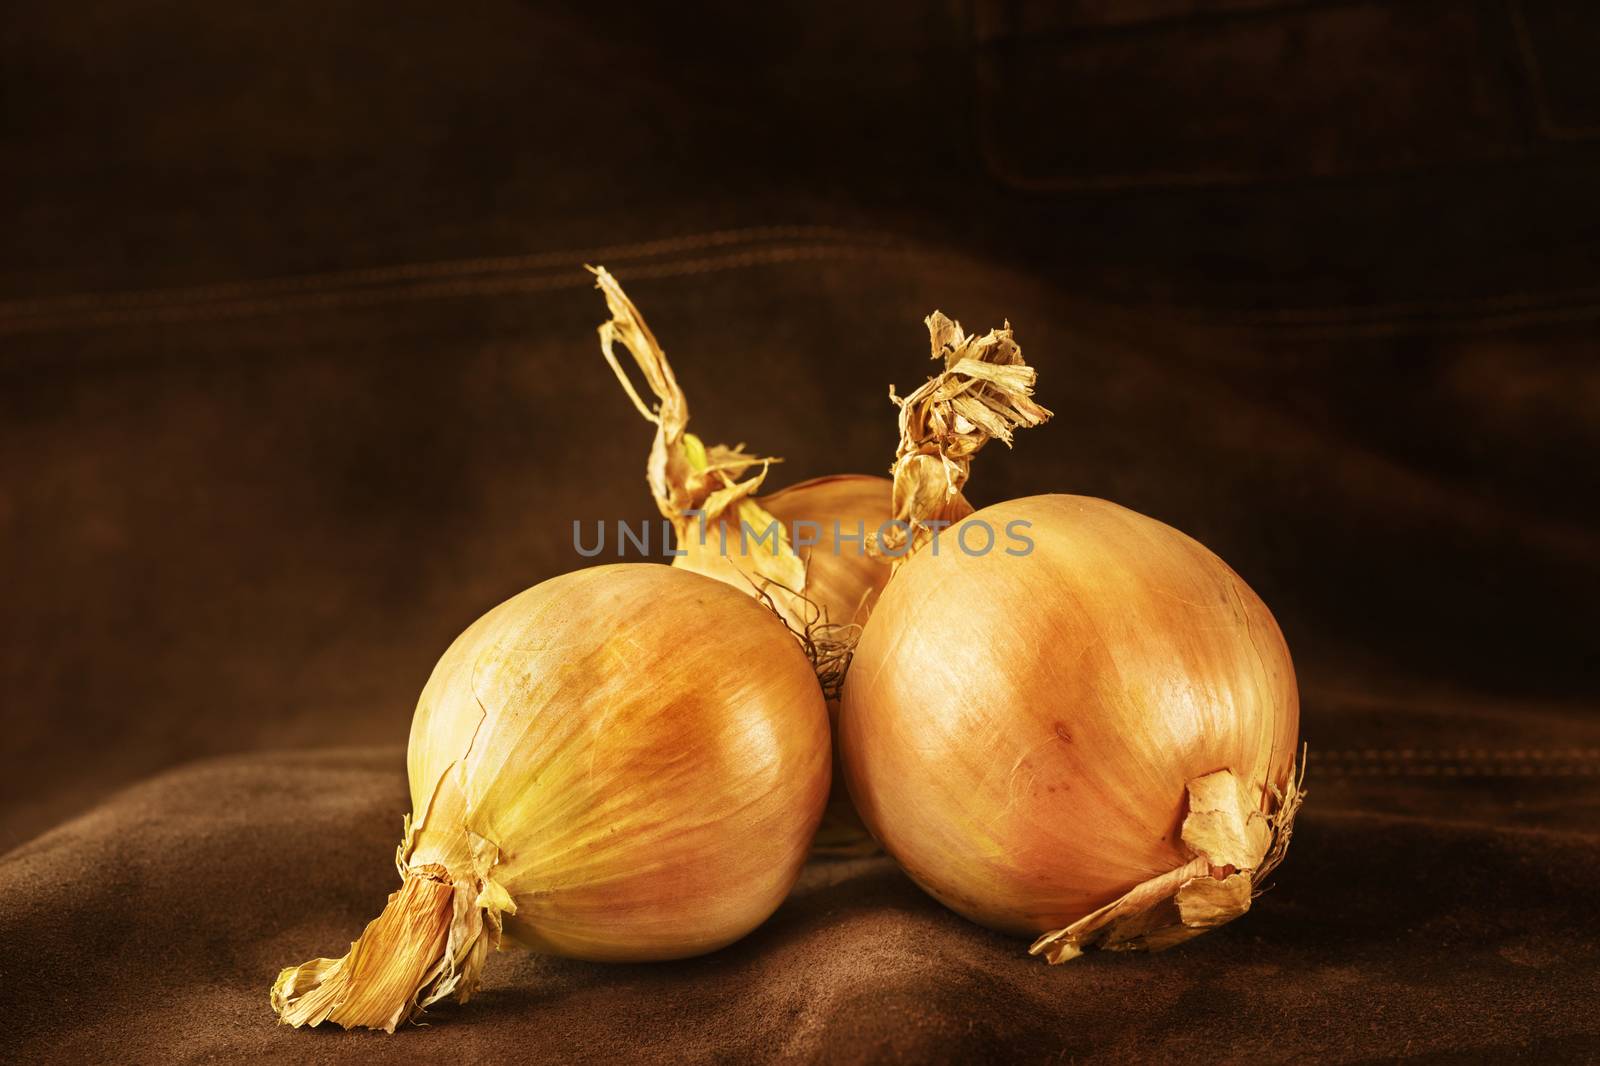 Brown onions   by victimewalker